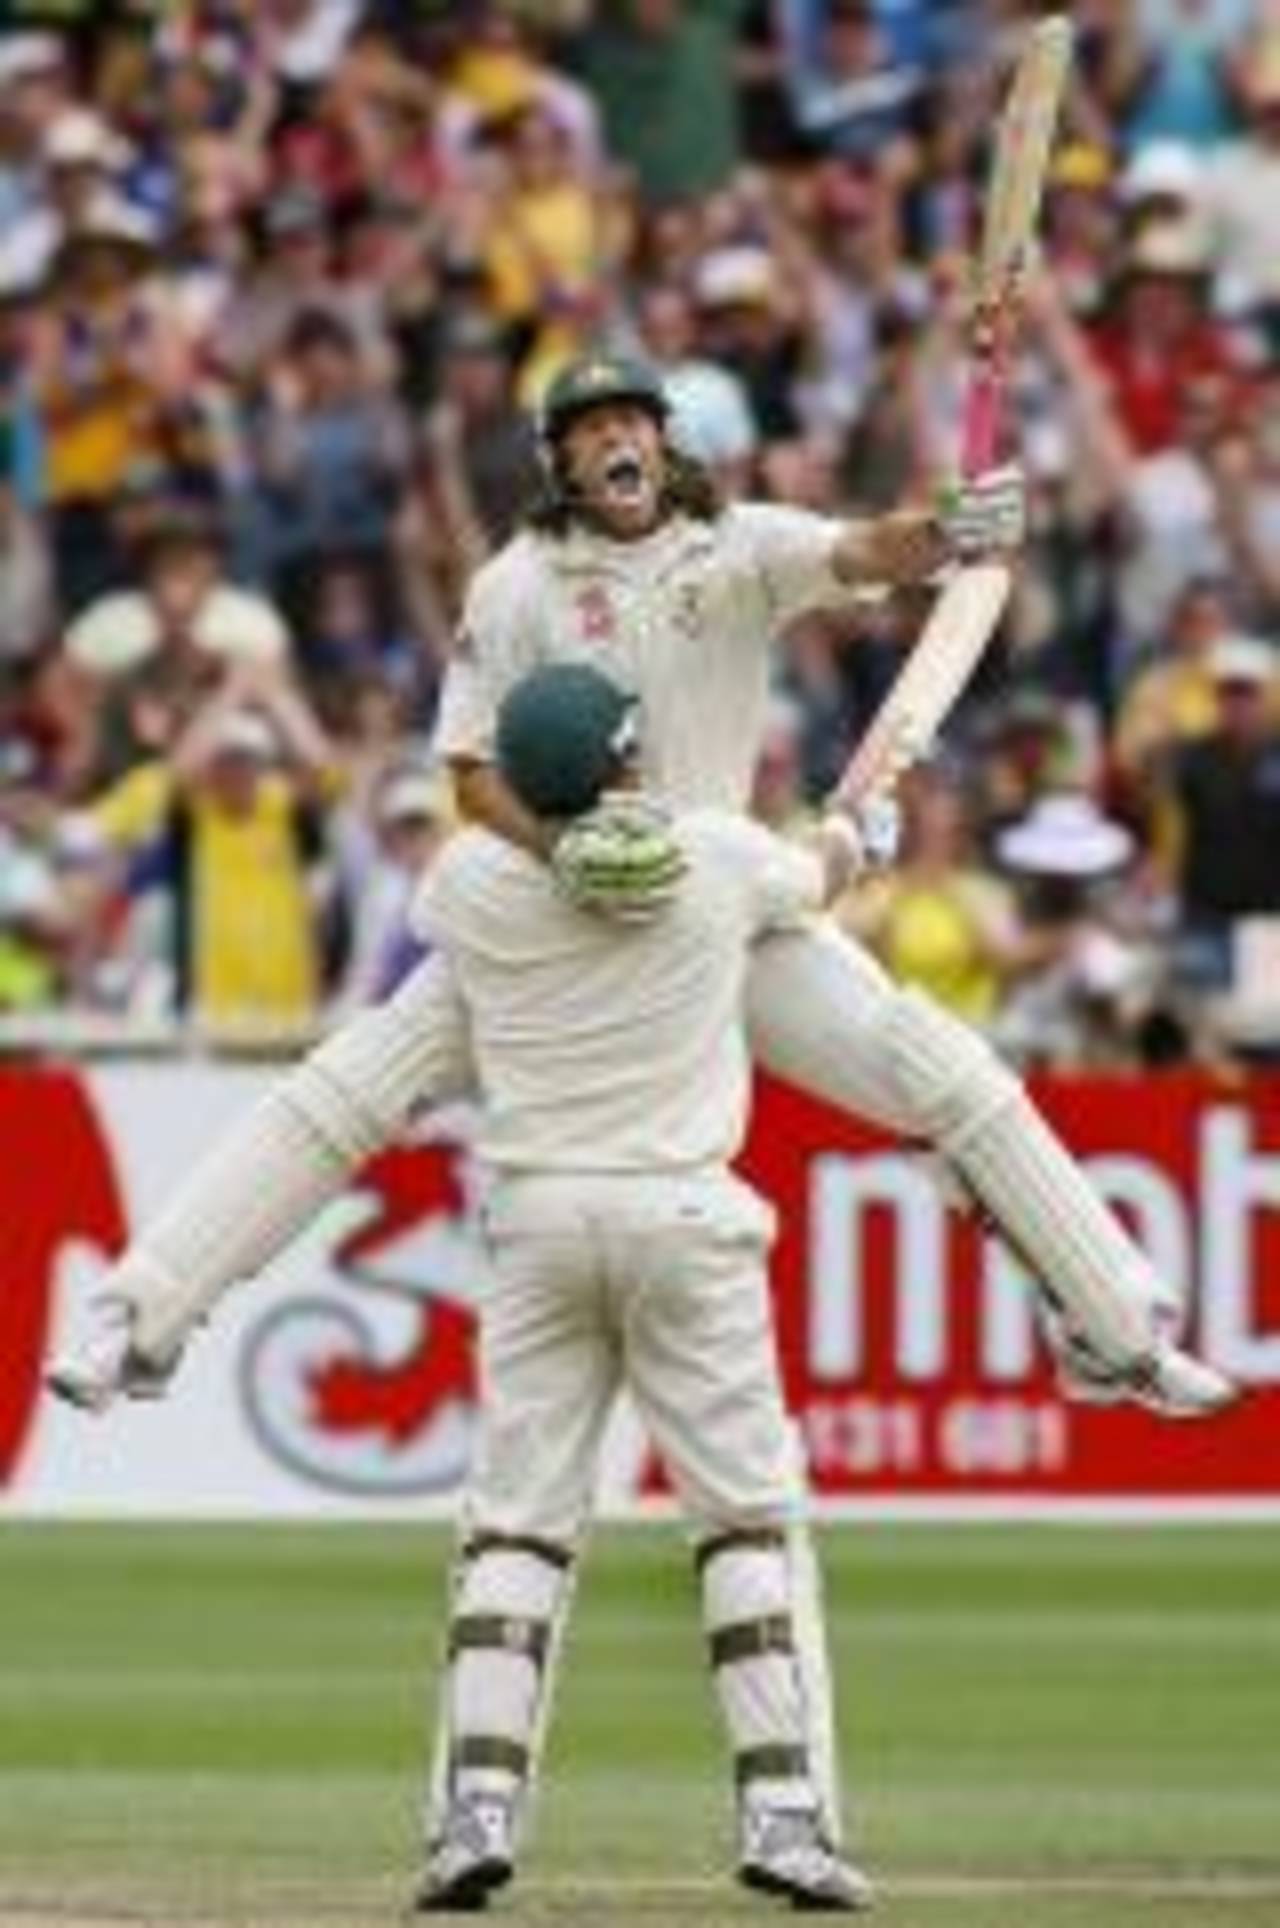 He aint heavy: Andrew Symonds jumps for joy with his partner Matthew Hayden after scoring his first Test century, Australia v England, 4th Test, Melbourne, December 27, 2006